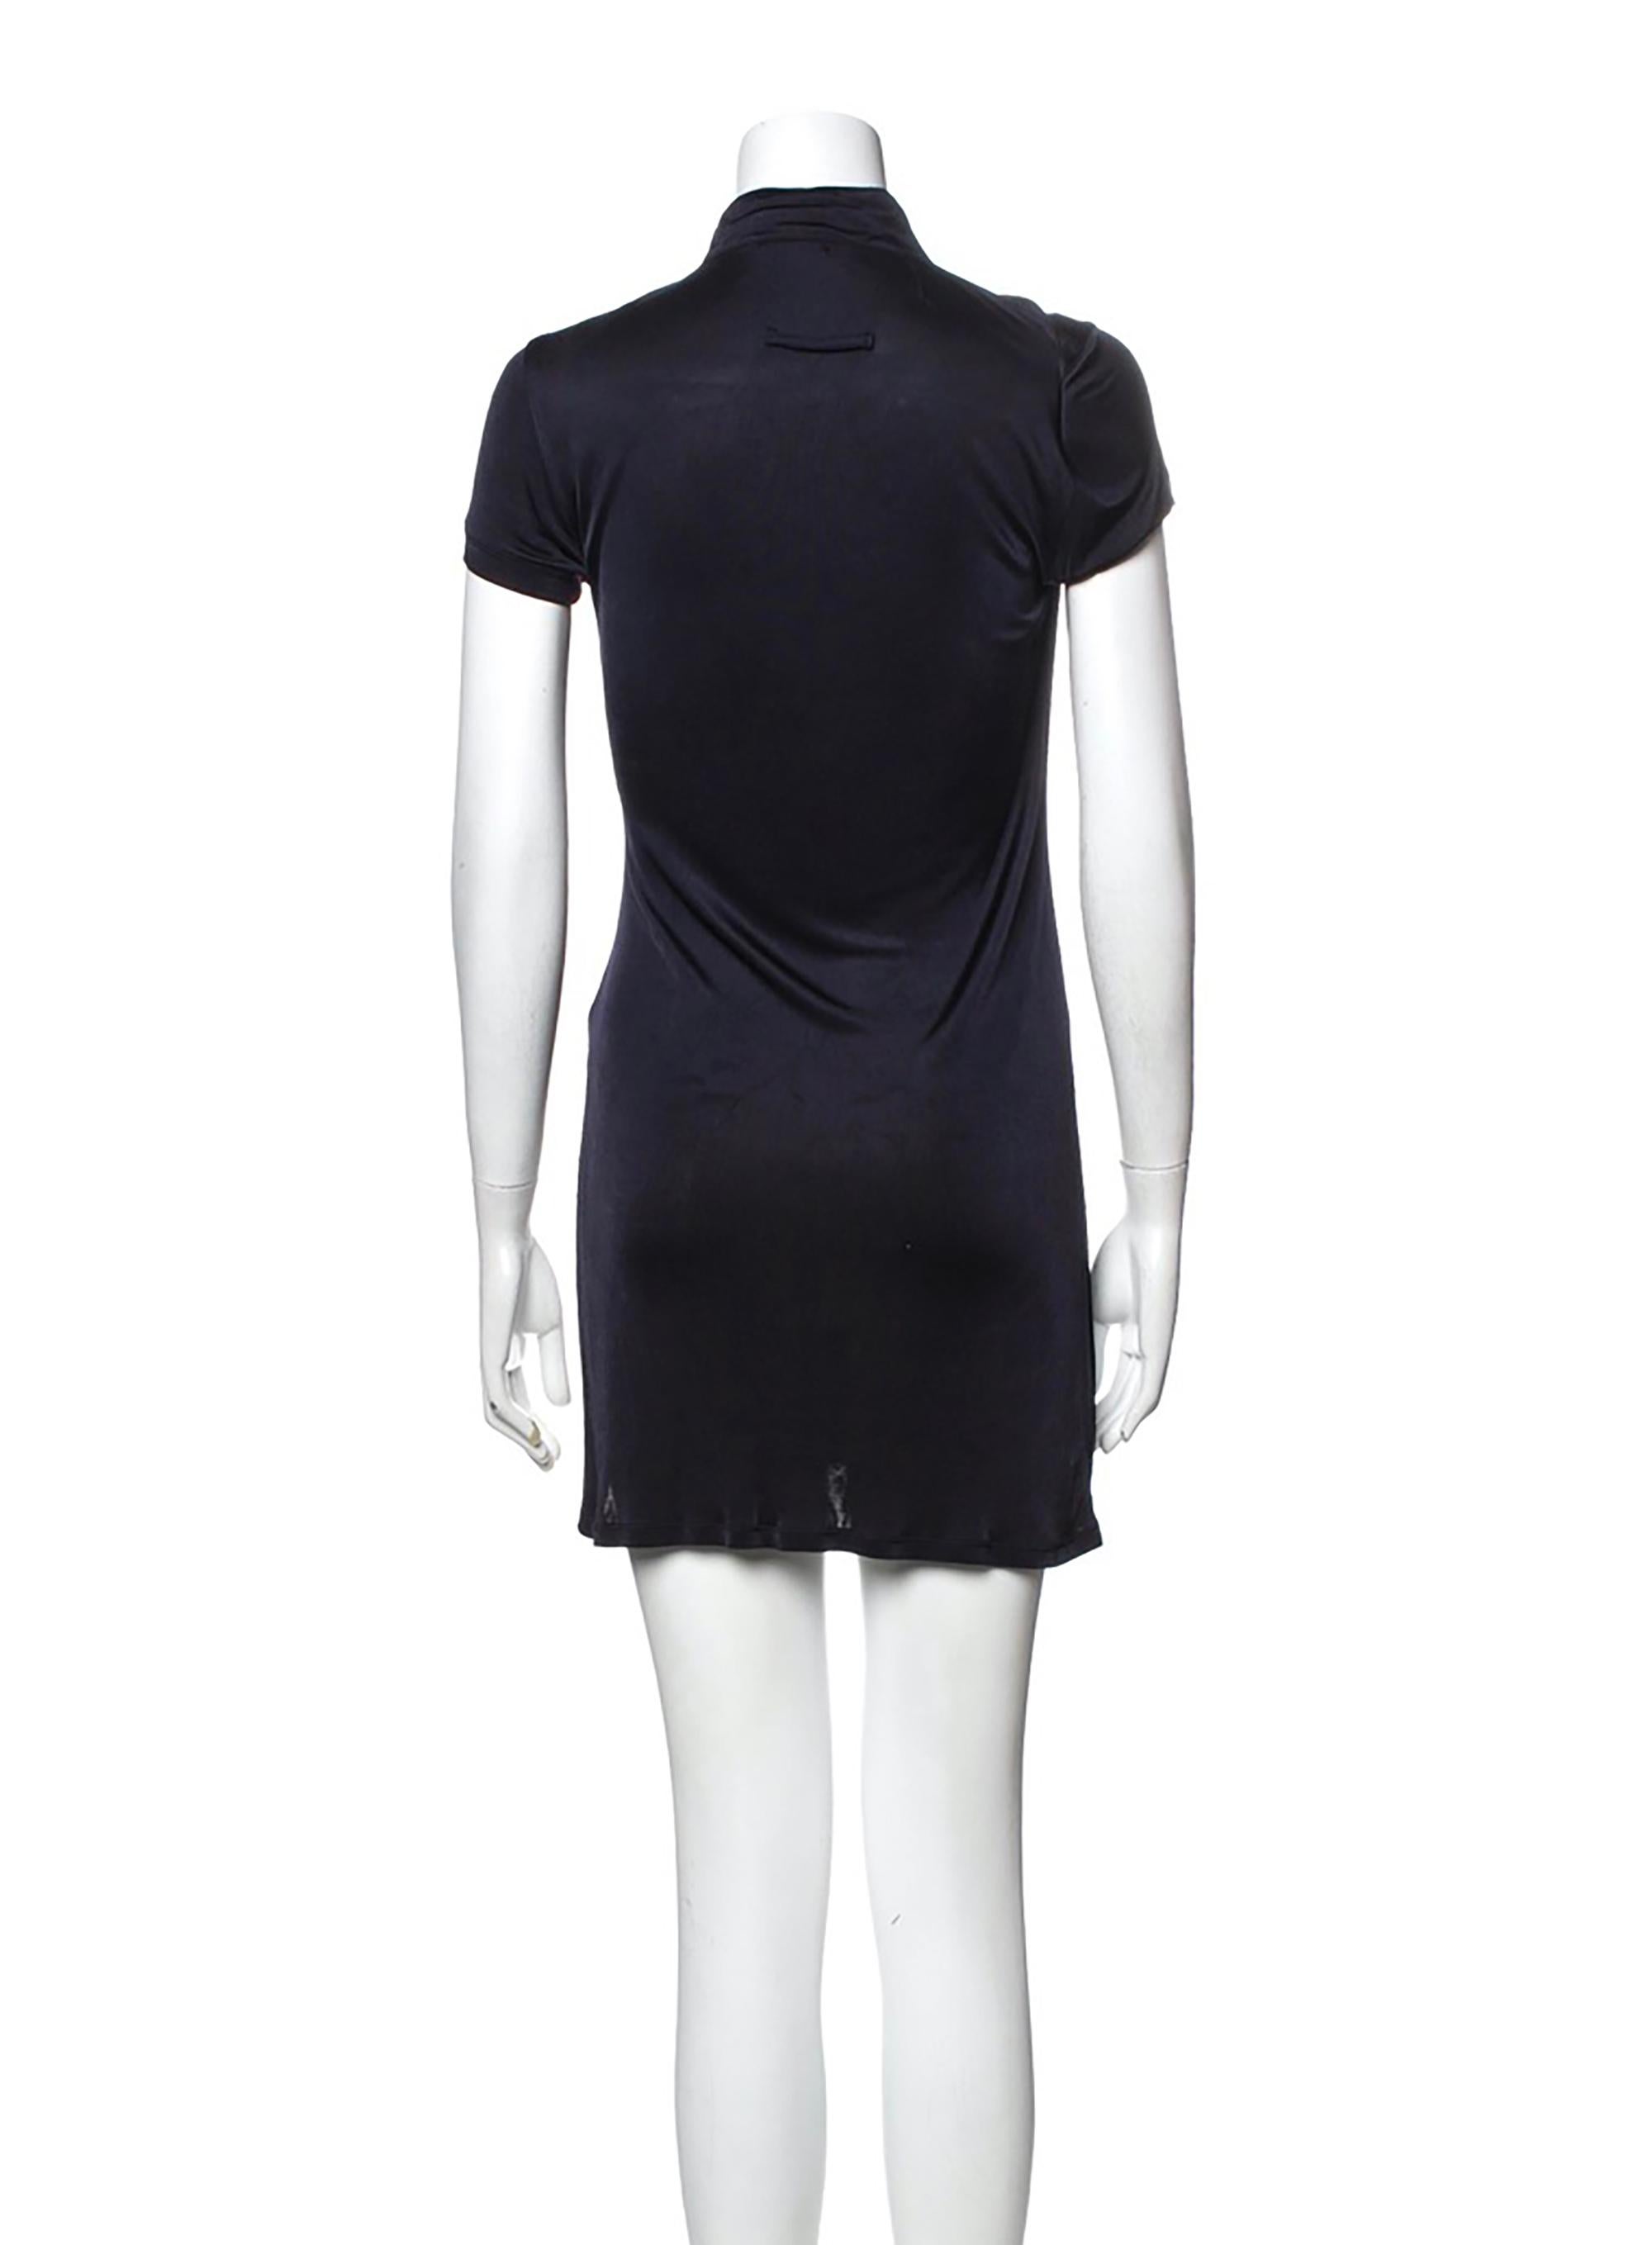 Jean Paul Gaultier mini dress 1990s In Fair Condition For Sale In Austin, TX